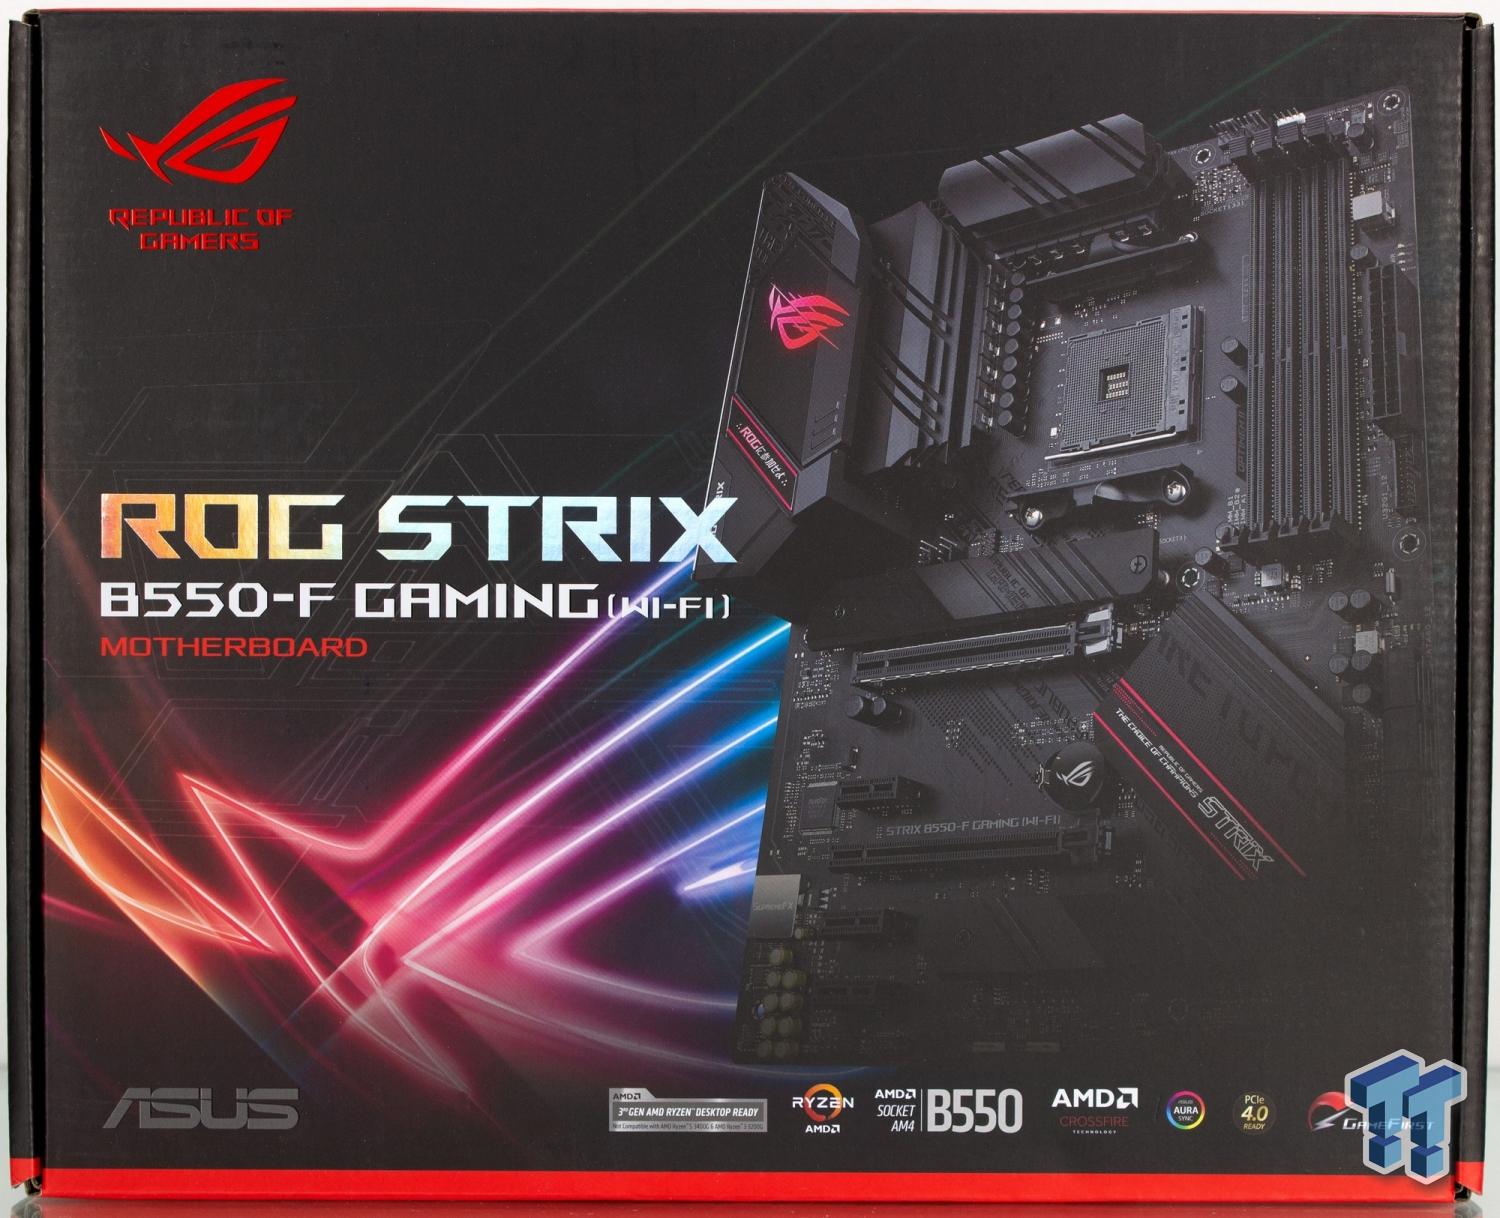 ASUS ROG Strix B550-F Gaming (Wi-Fi) Motherboard Review